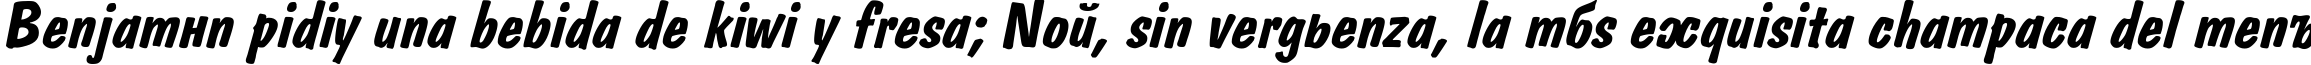 Пример написания шрифтом Domkrat Bold Italic текста на испанском